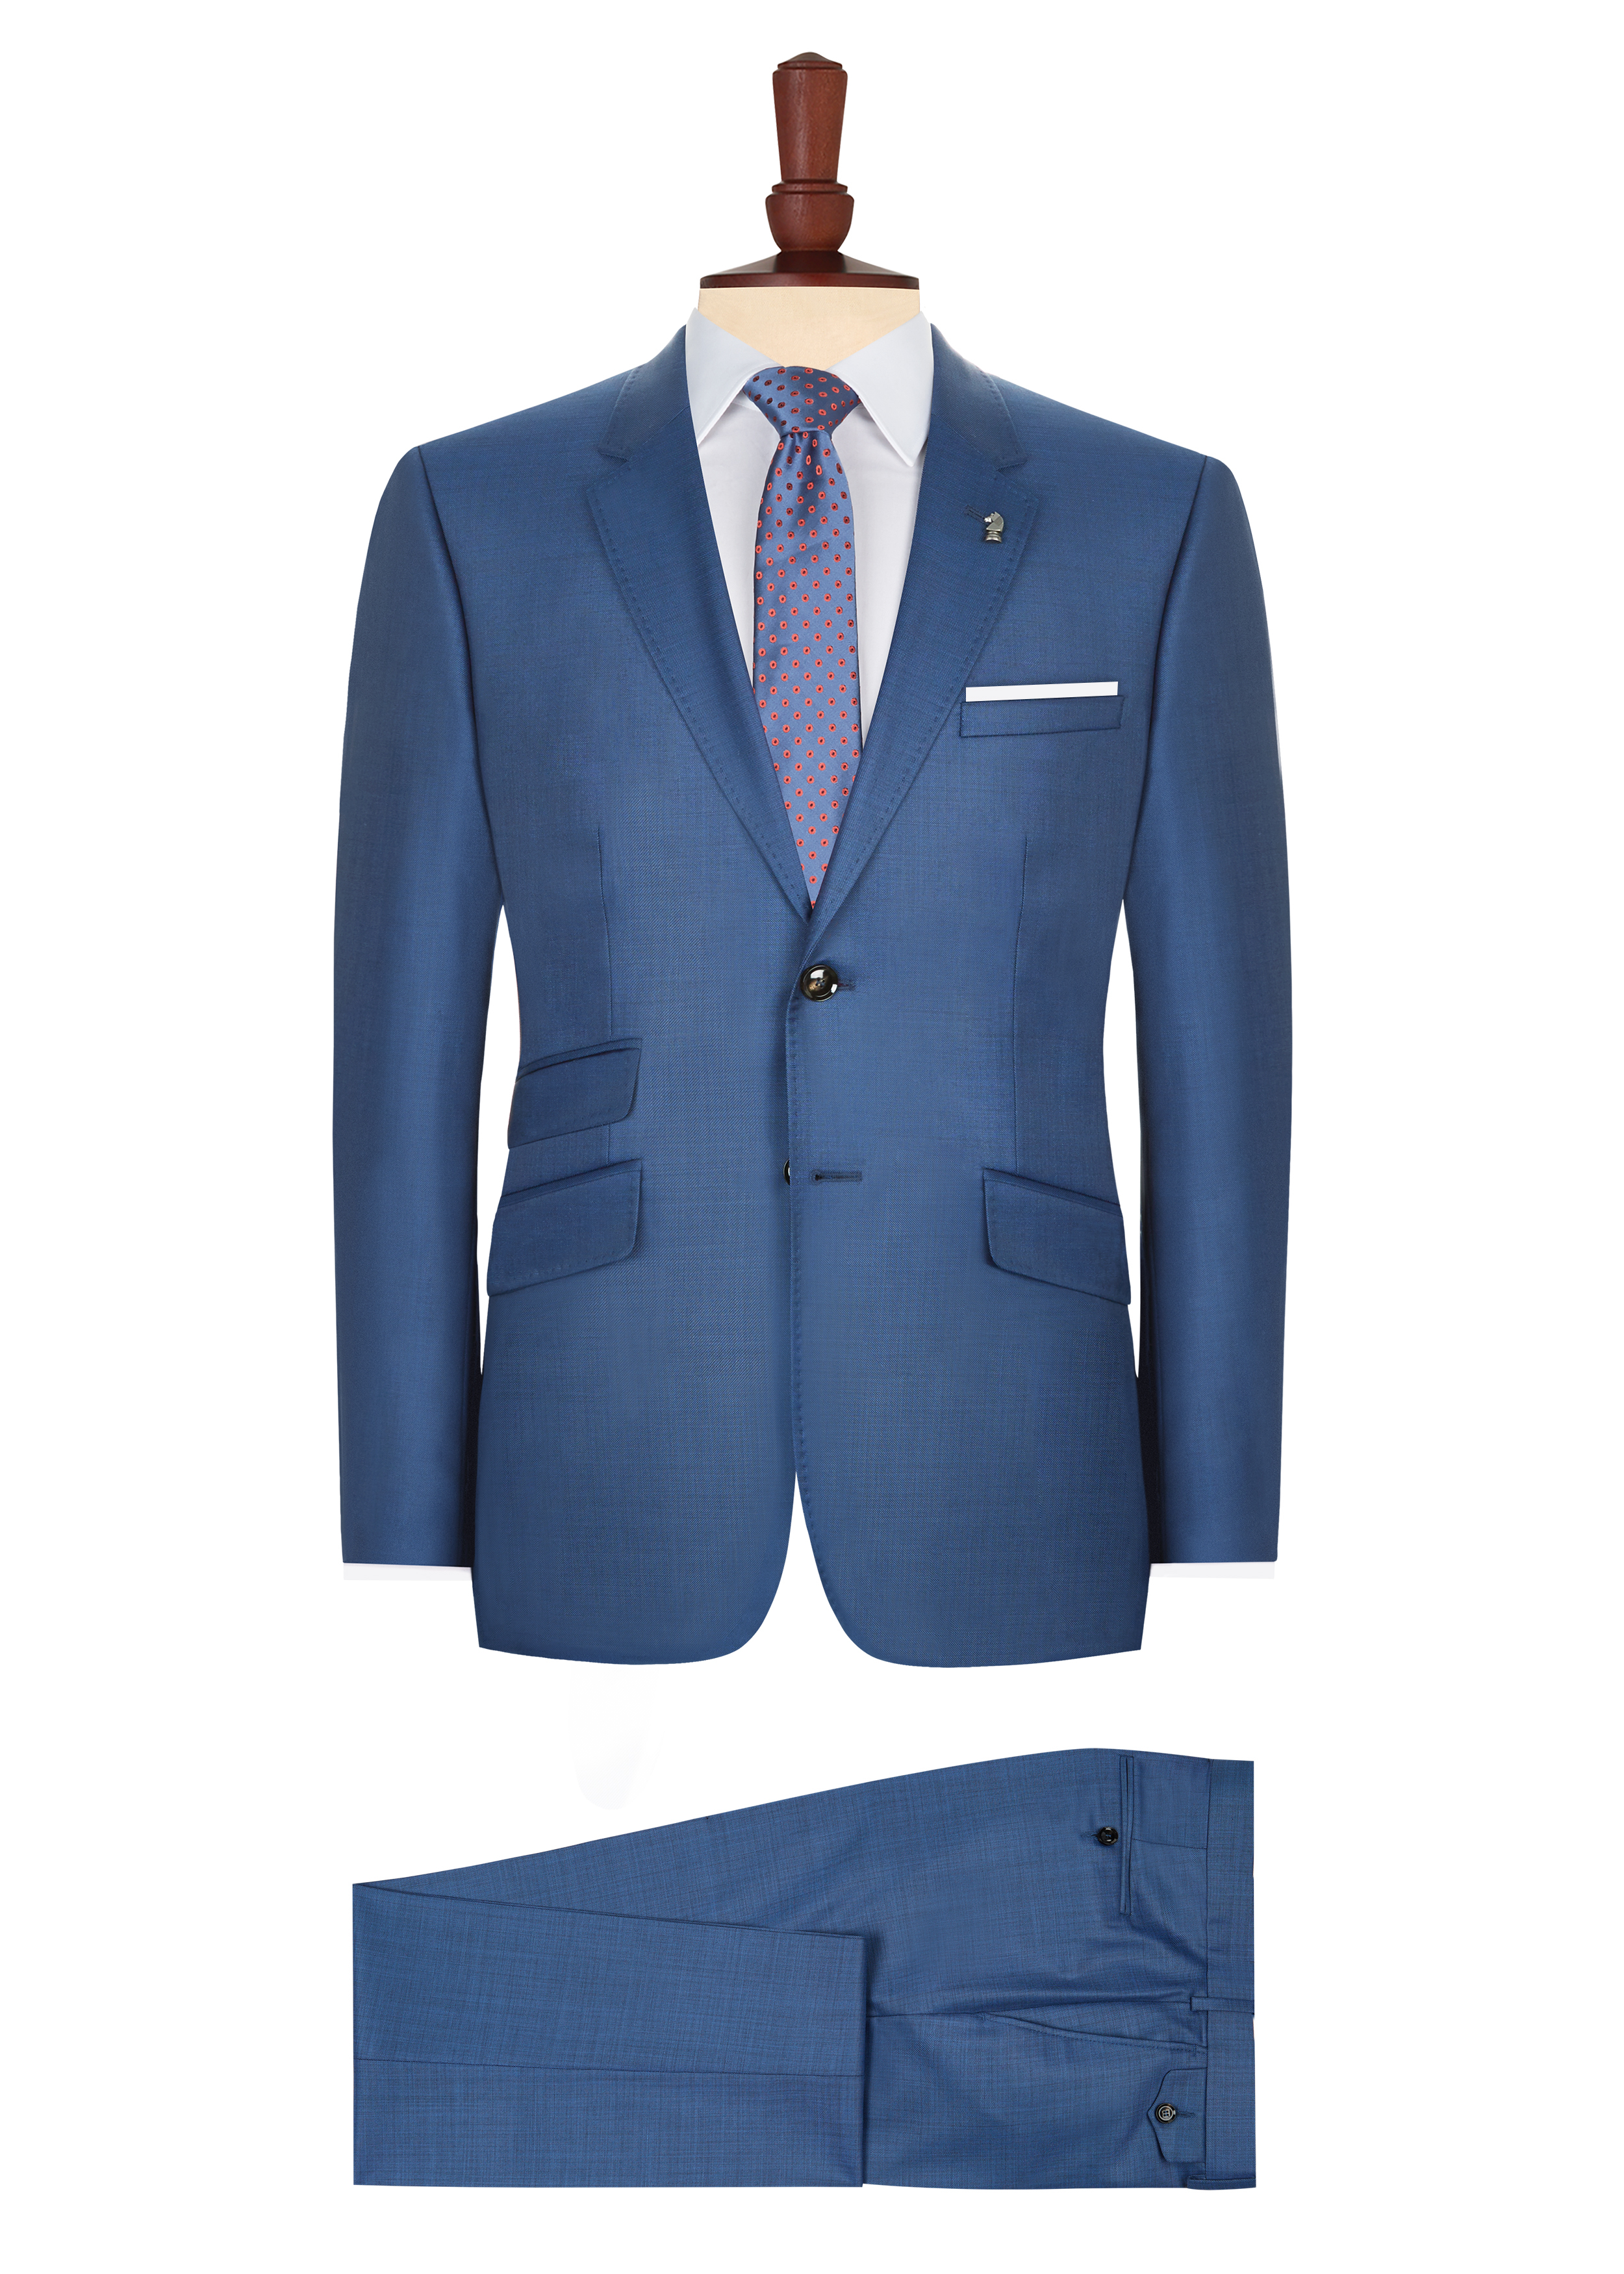 Ted Baker Wool Tailored Fit Light Blue Sharkskin Endurance Suit for Men -  Lyst